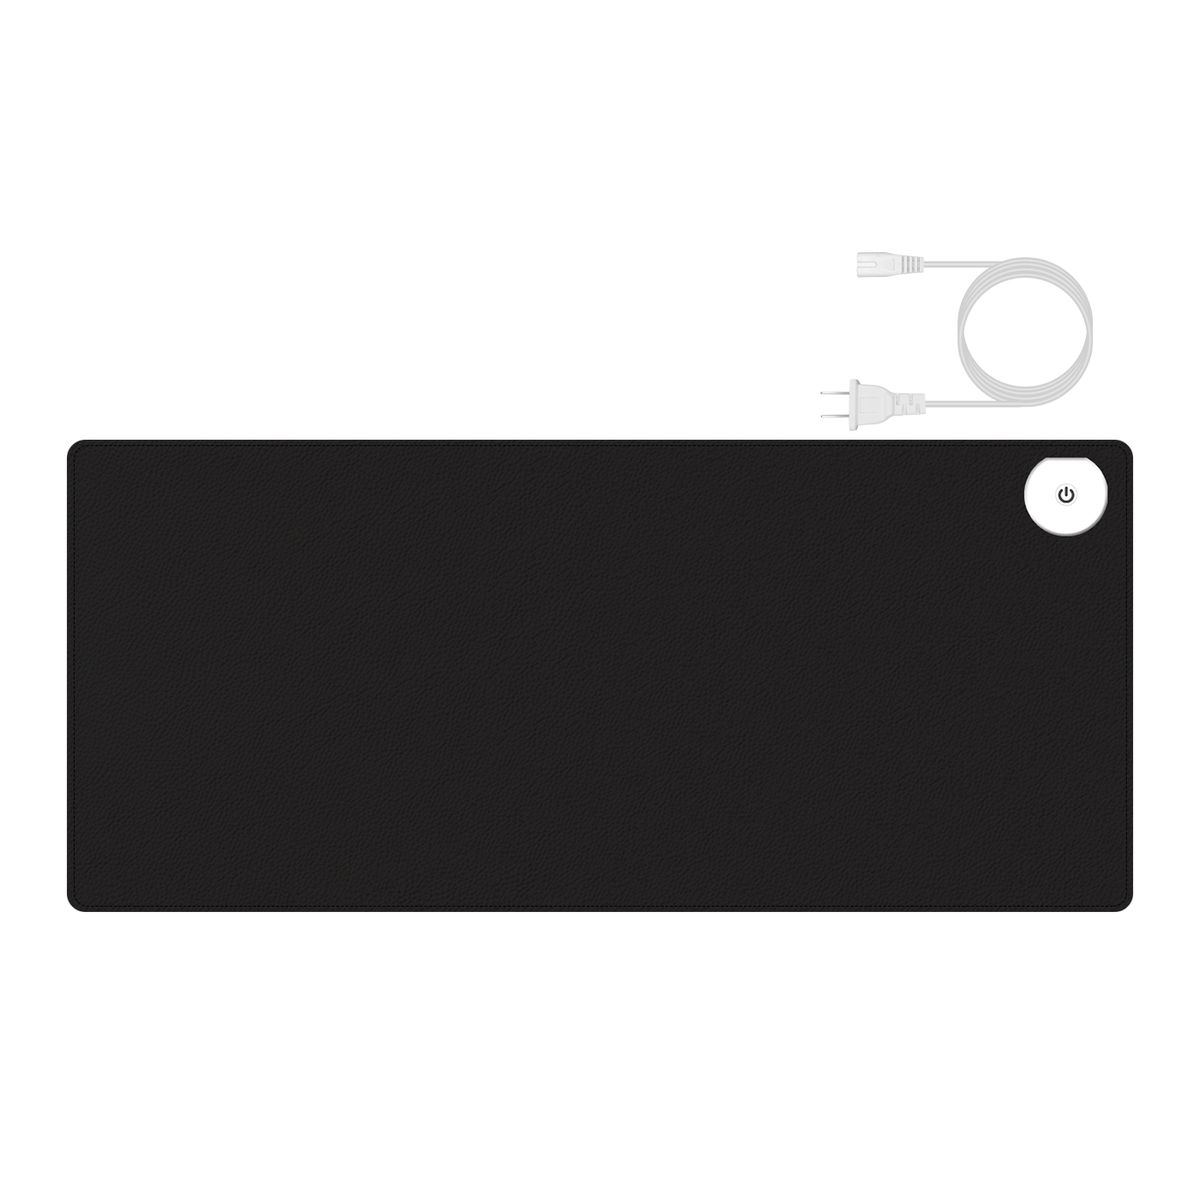 Photos - Mouse Pad iMounTEK ® Heated Desk , Scratch-Resistant & Waterproof  